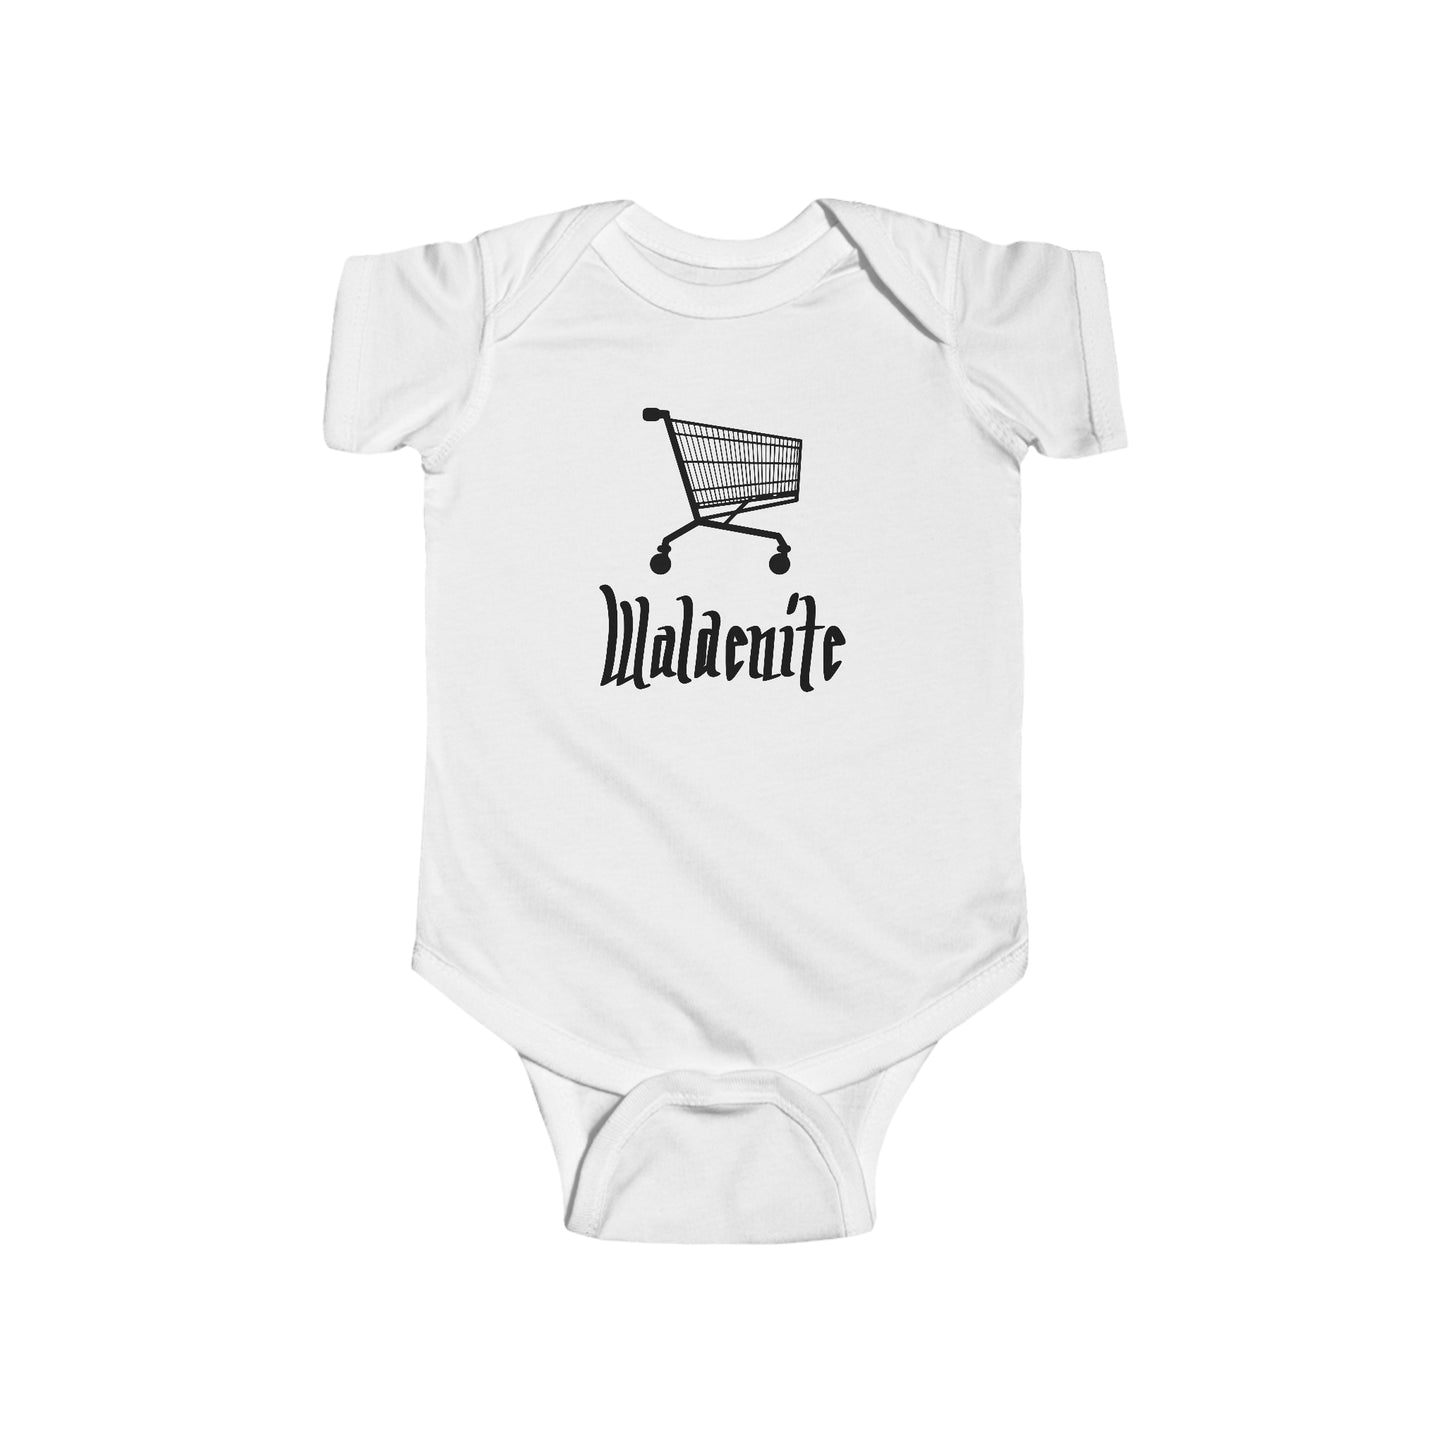 Waldenite Cart Infant Fine Jersey Bodysuit